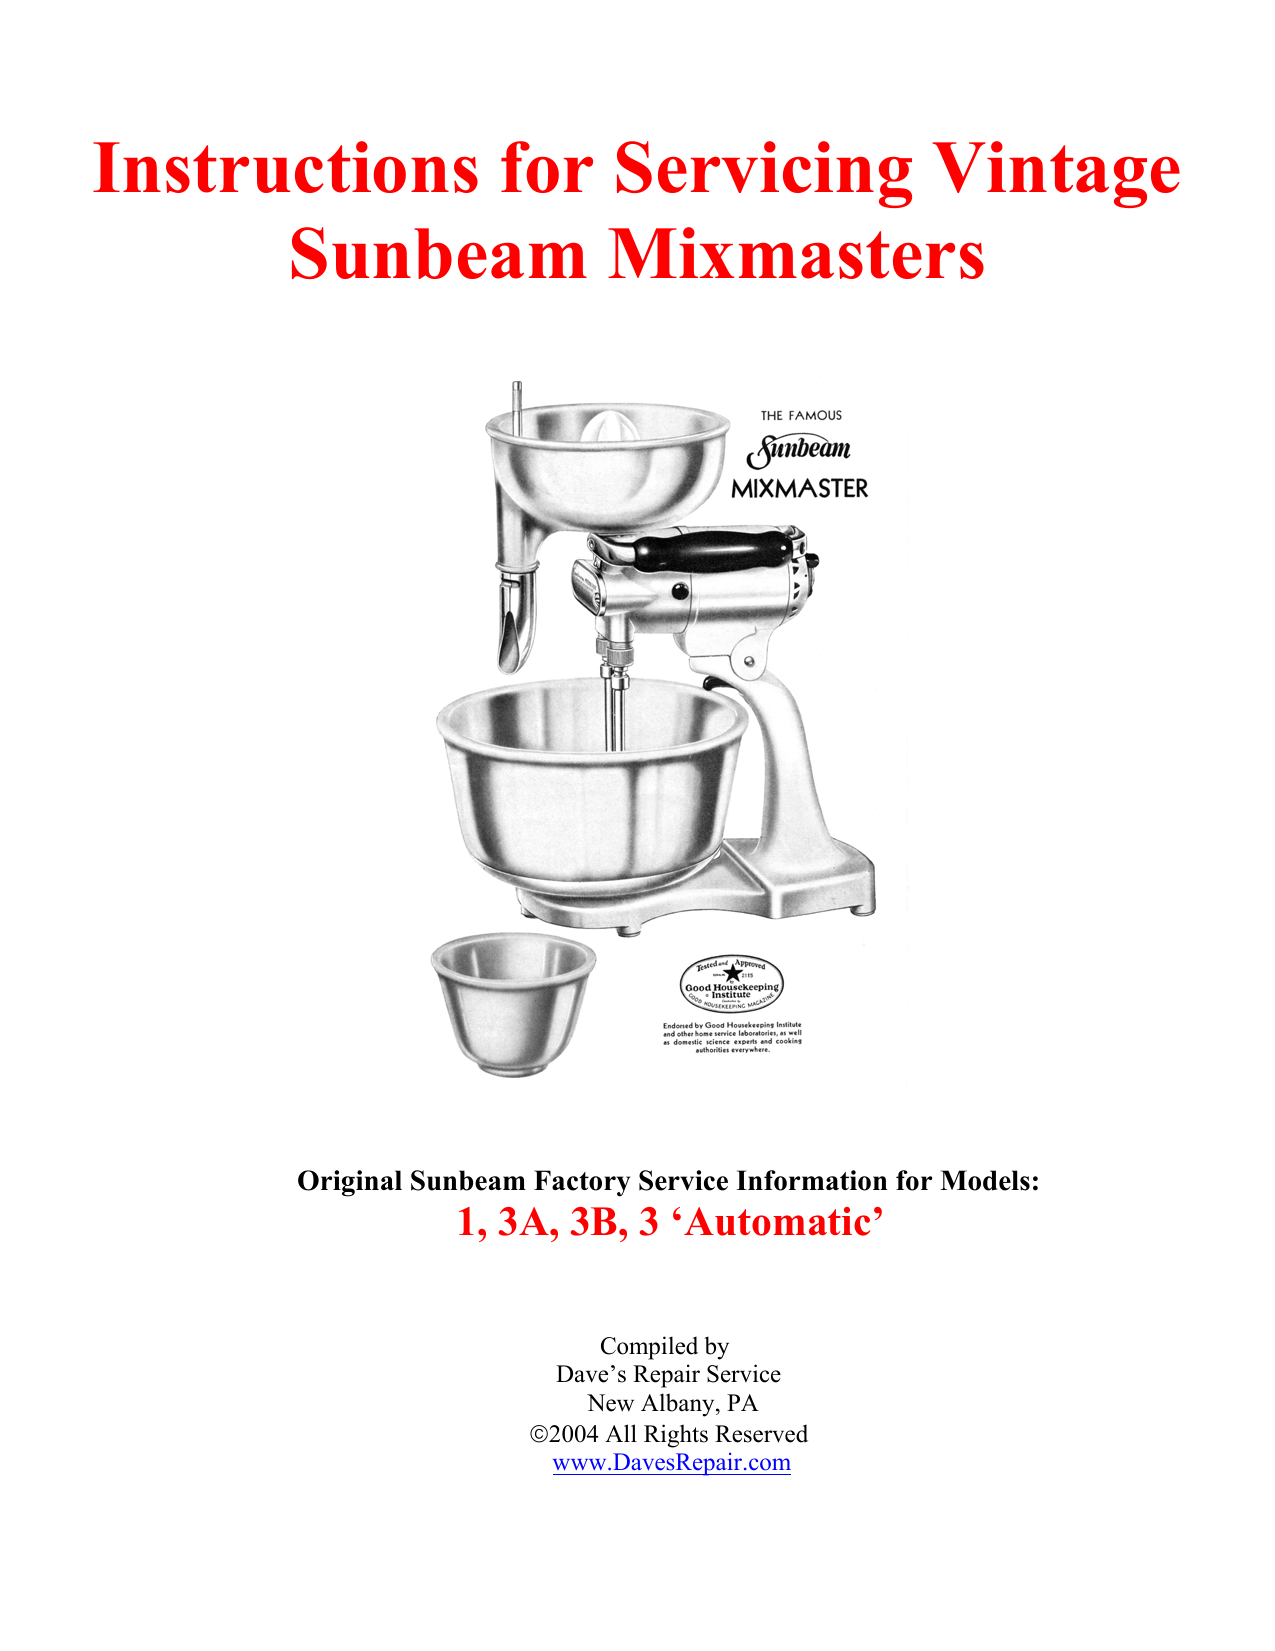 Sunbeam Mixmaster Model 11 service and maintenance. 